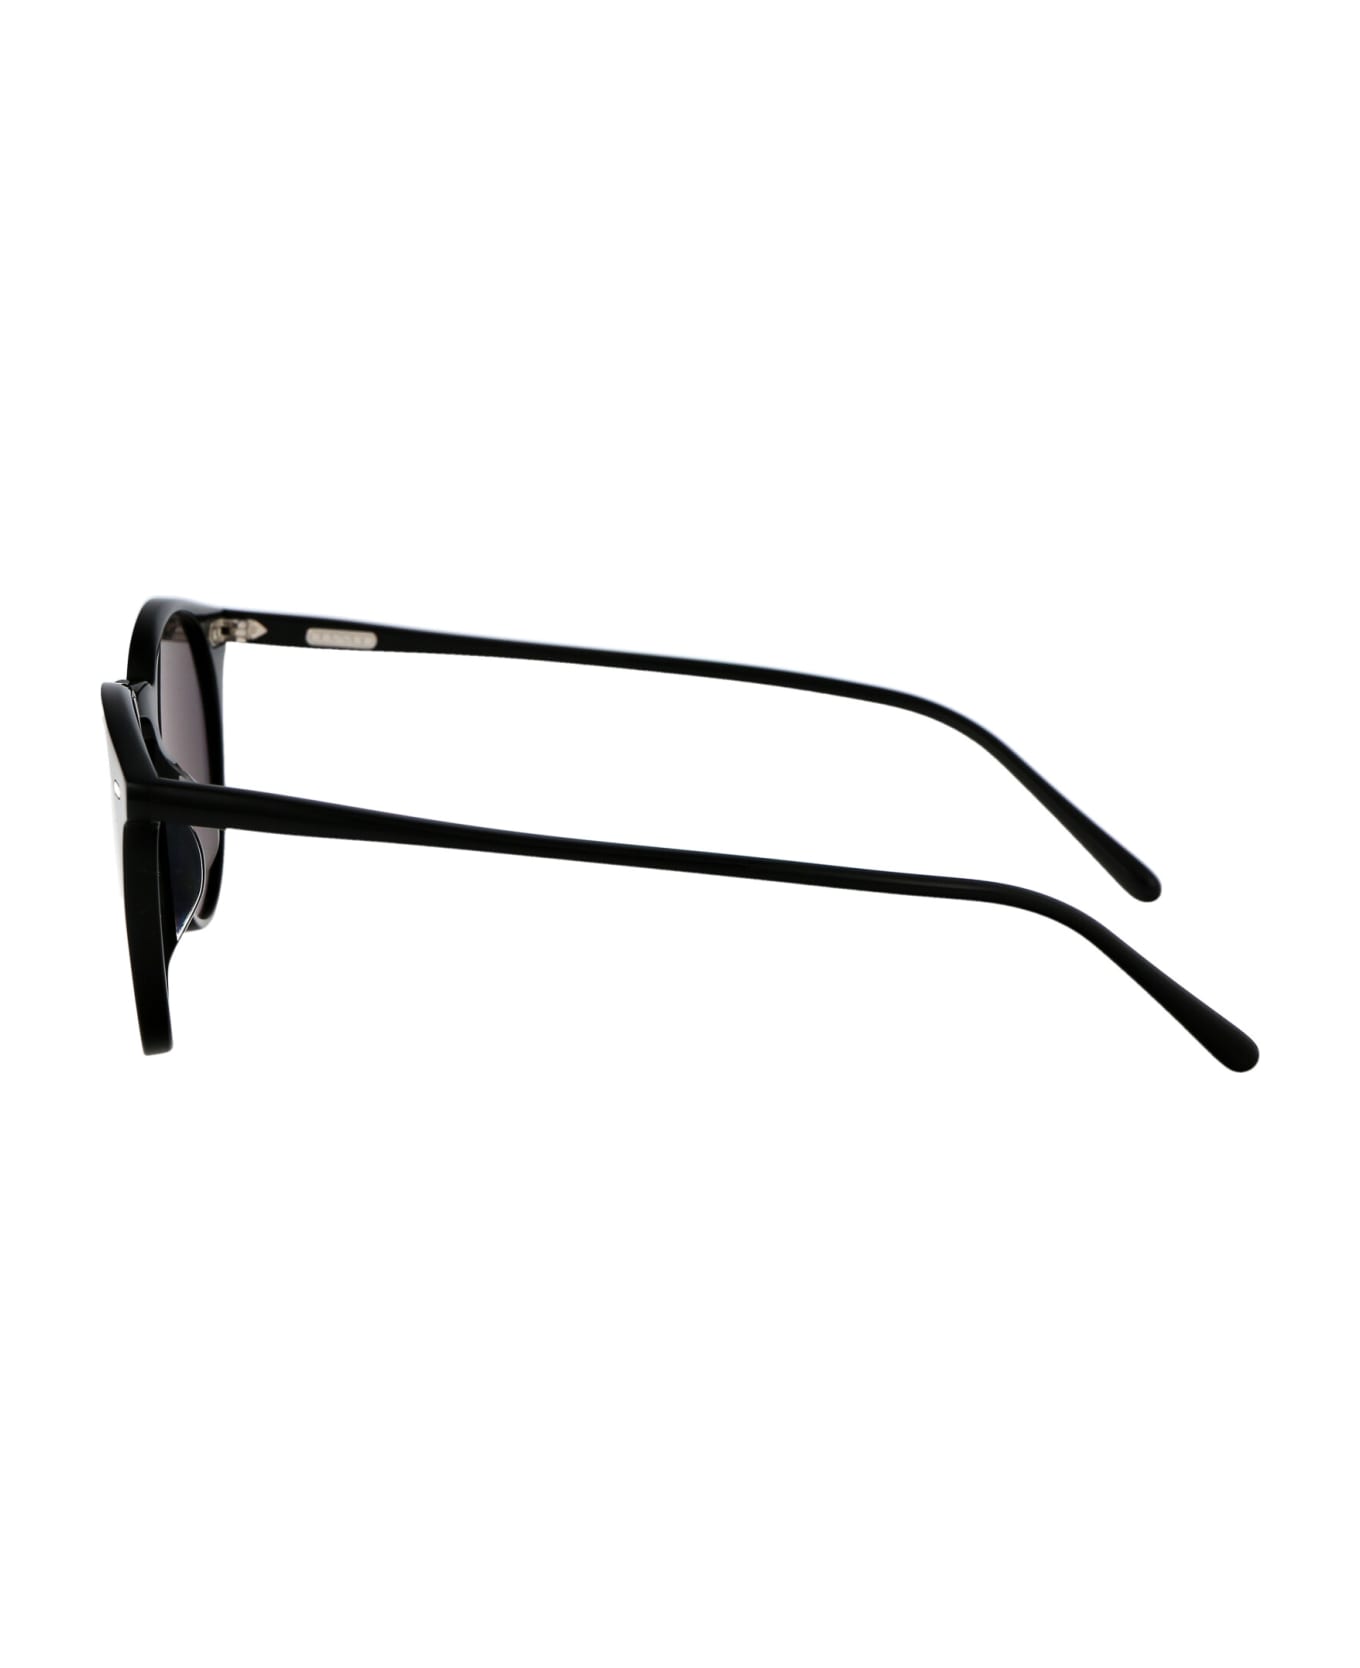 Oliver Peoples N.02 Sun Sunglasses - 1731R5 Black